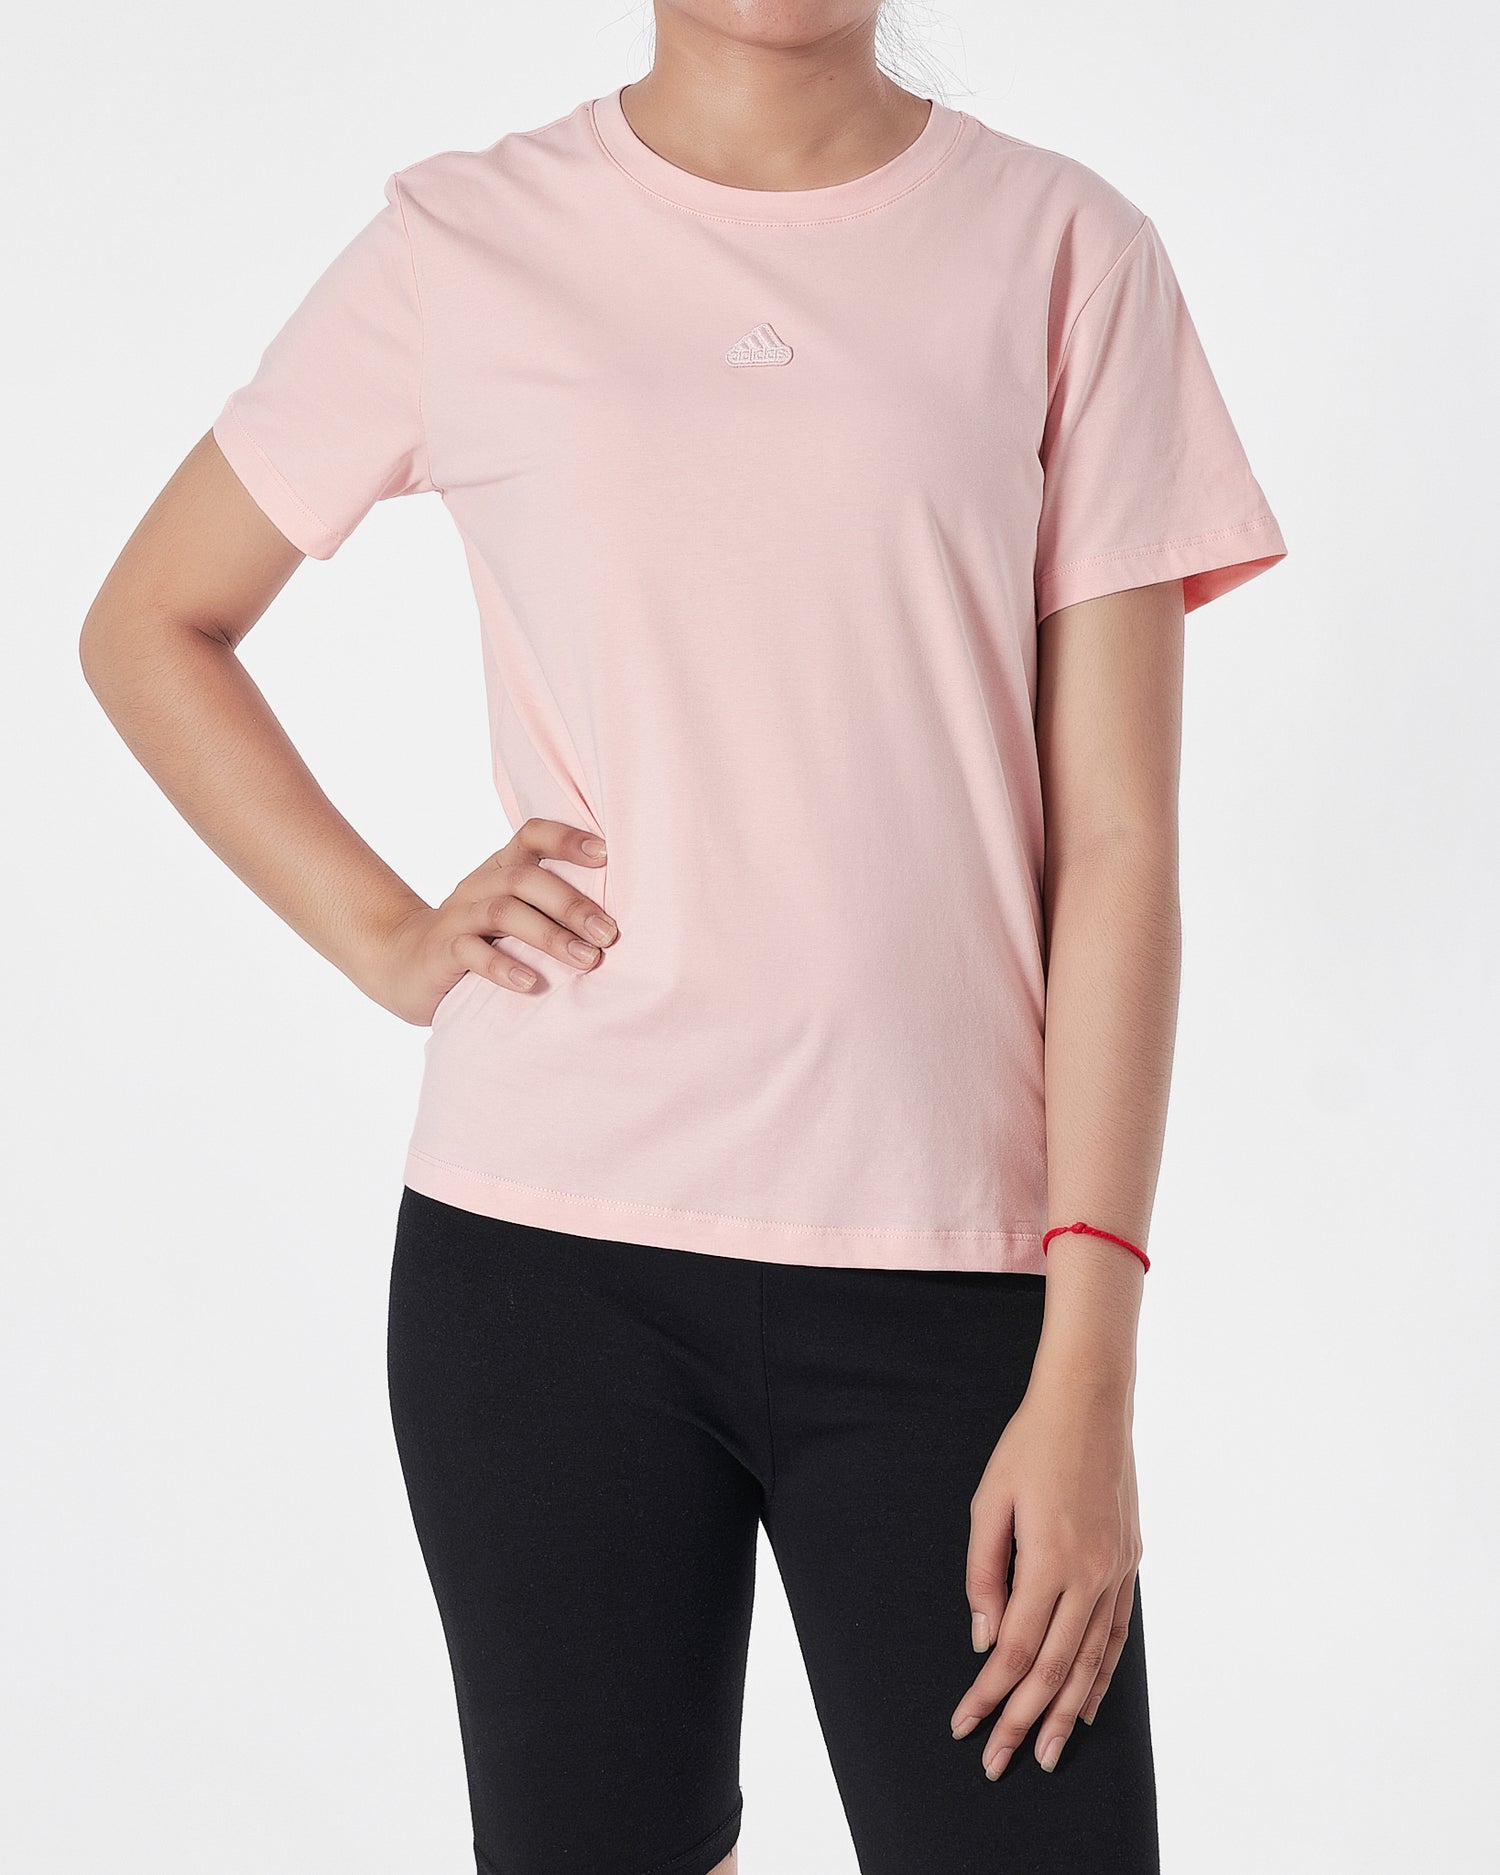 ADI Logo Embroidered Lady Pink T-Shirt 13.90